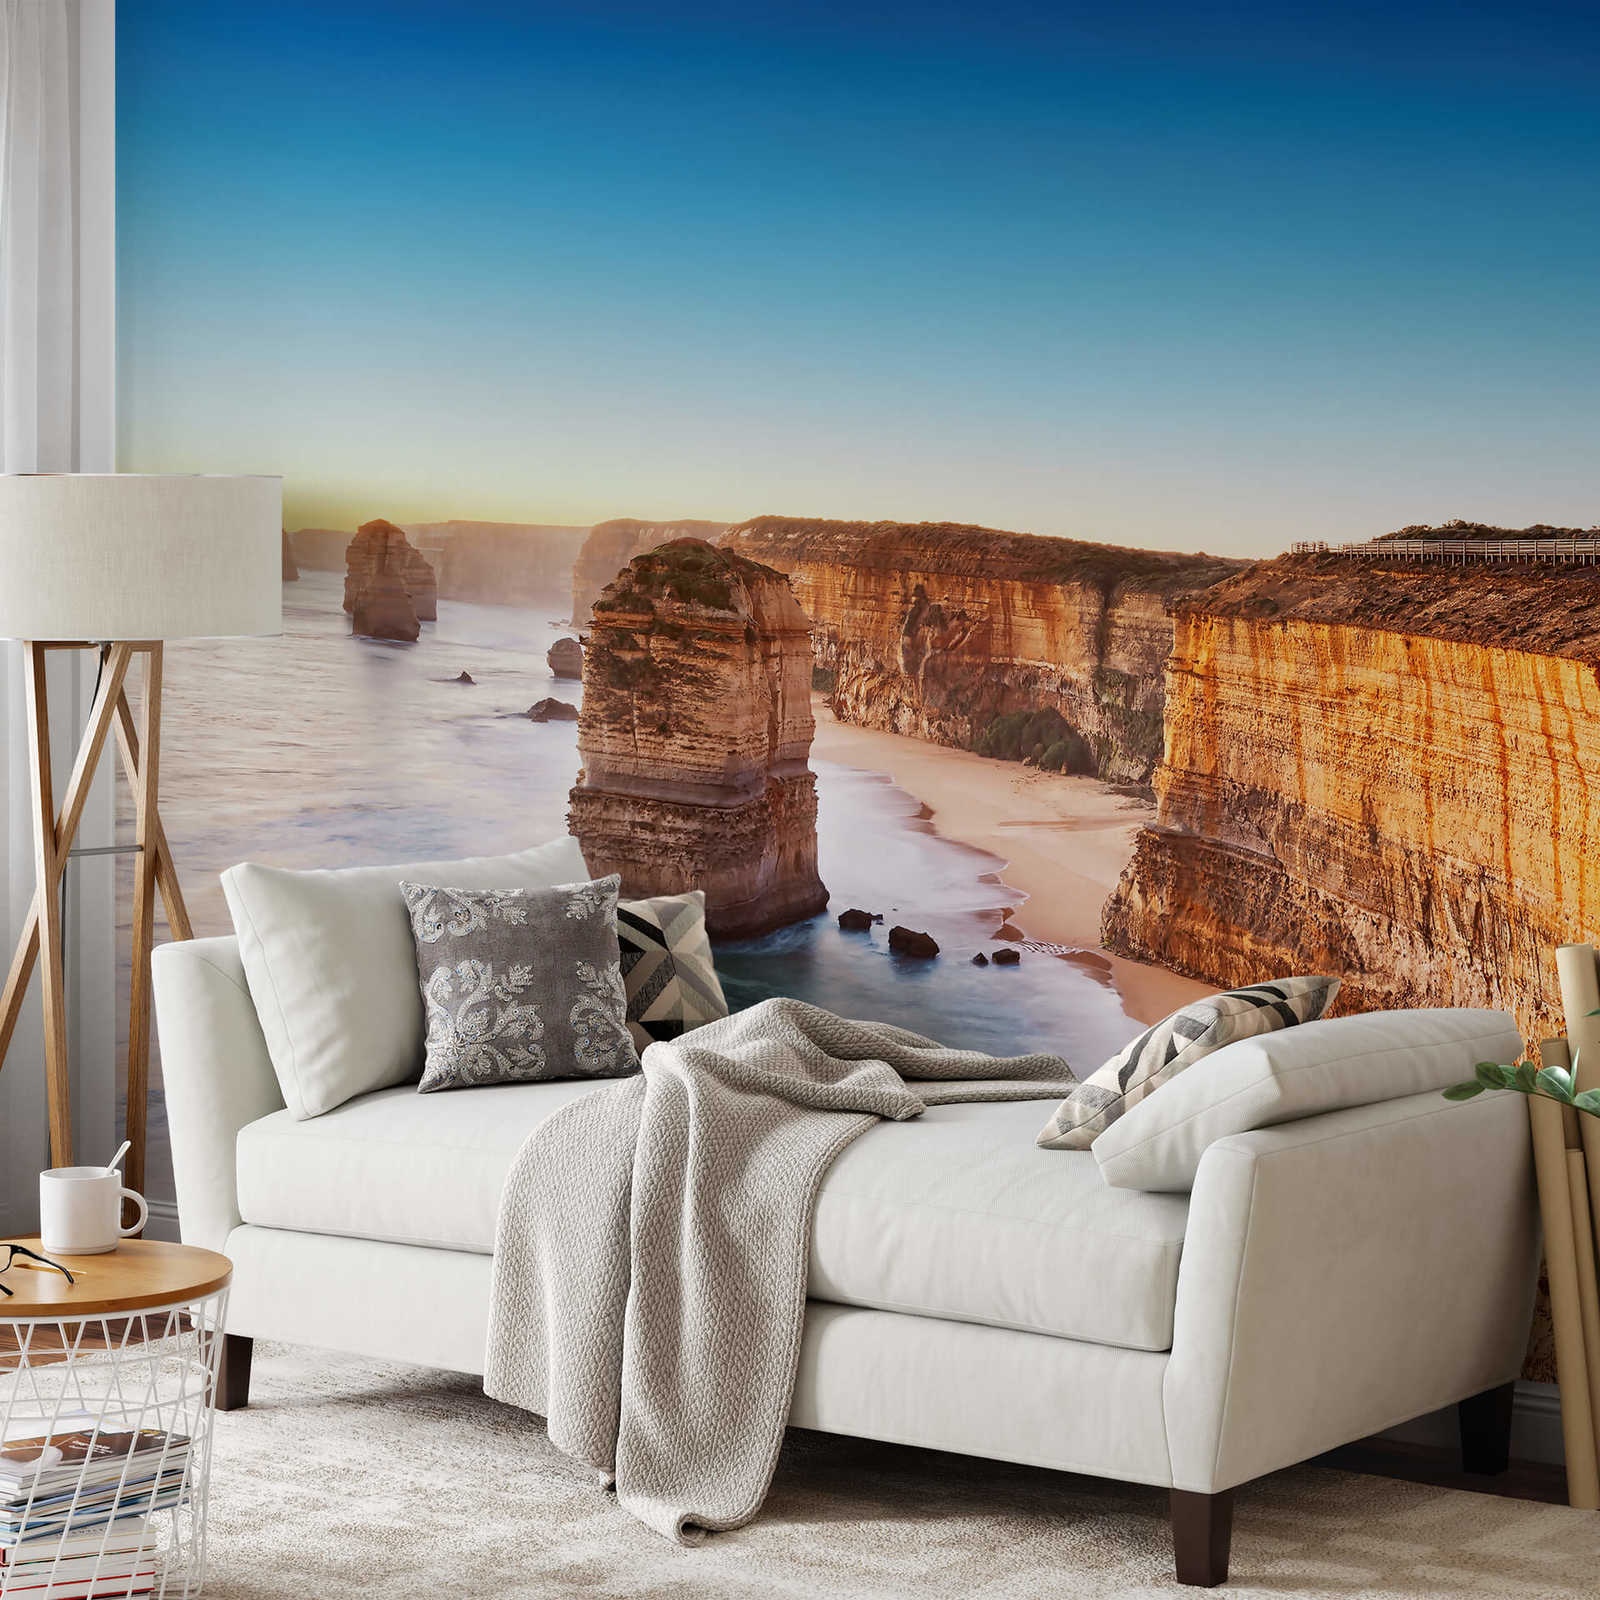             Photo wallpaper landscape cliffs by the sea - blue, brown
        